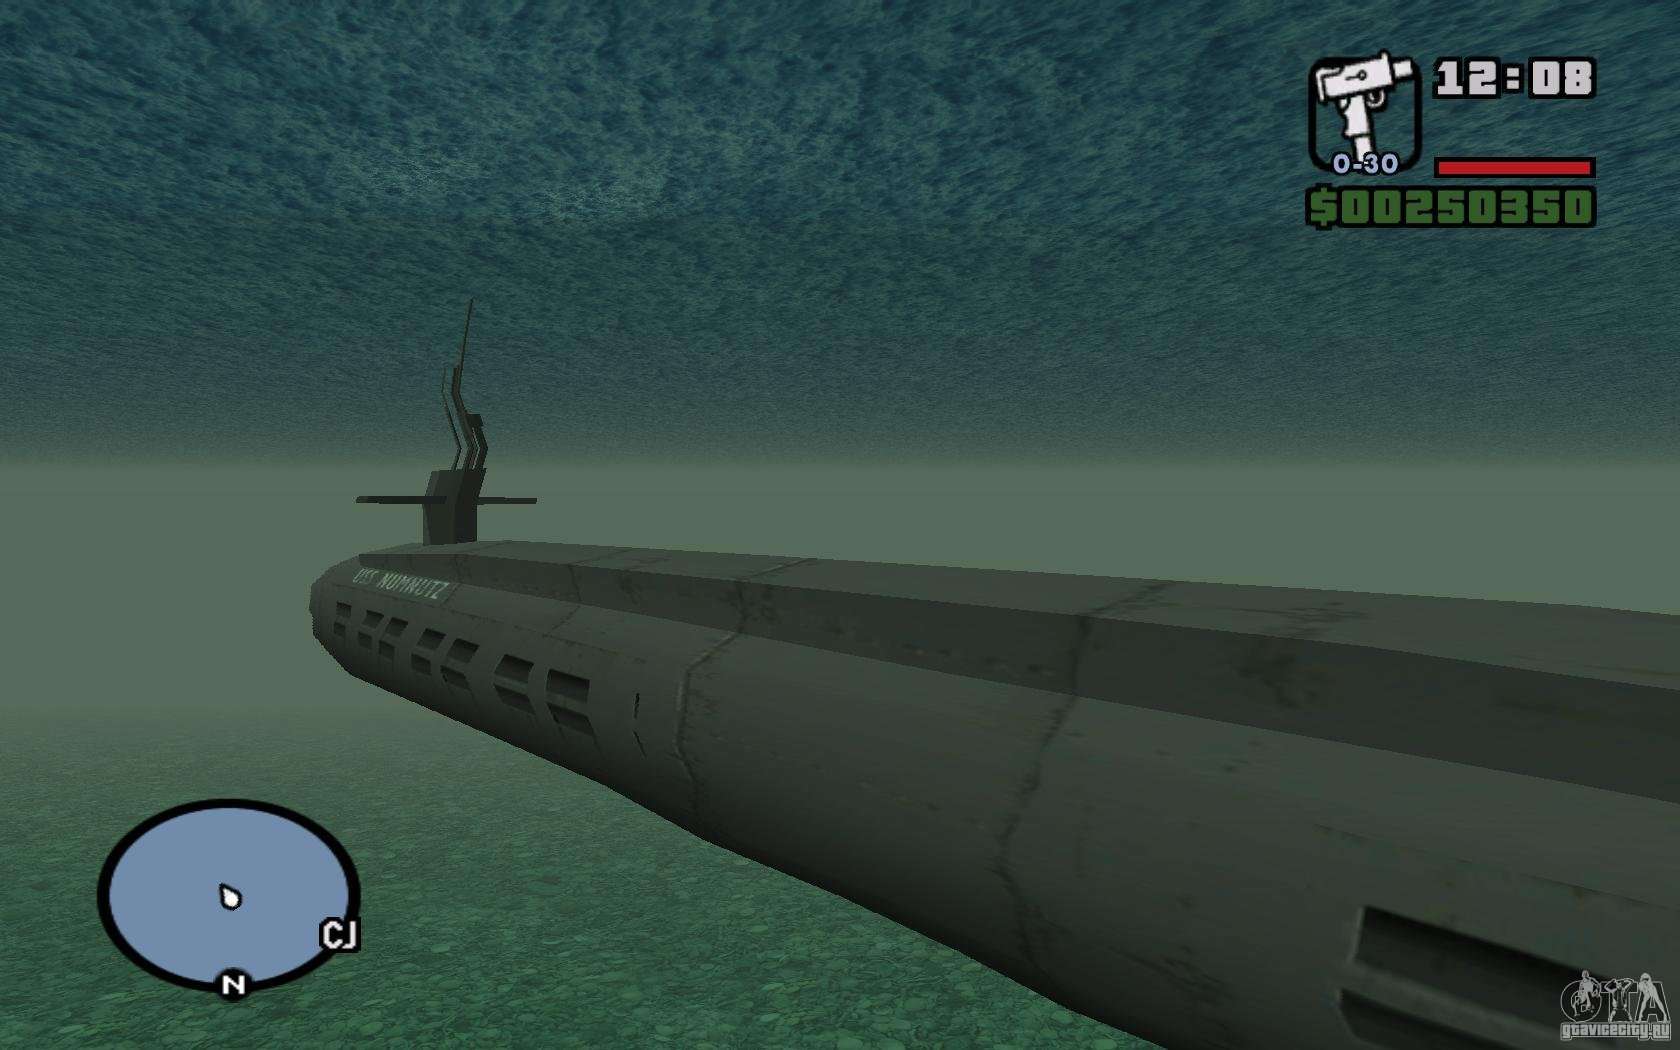 Submarine for GTA San Andreas